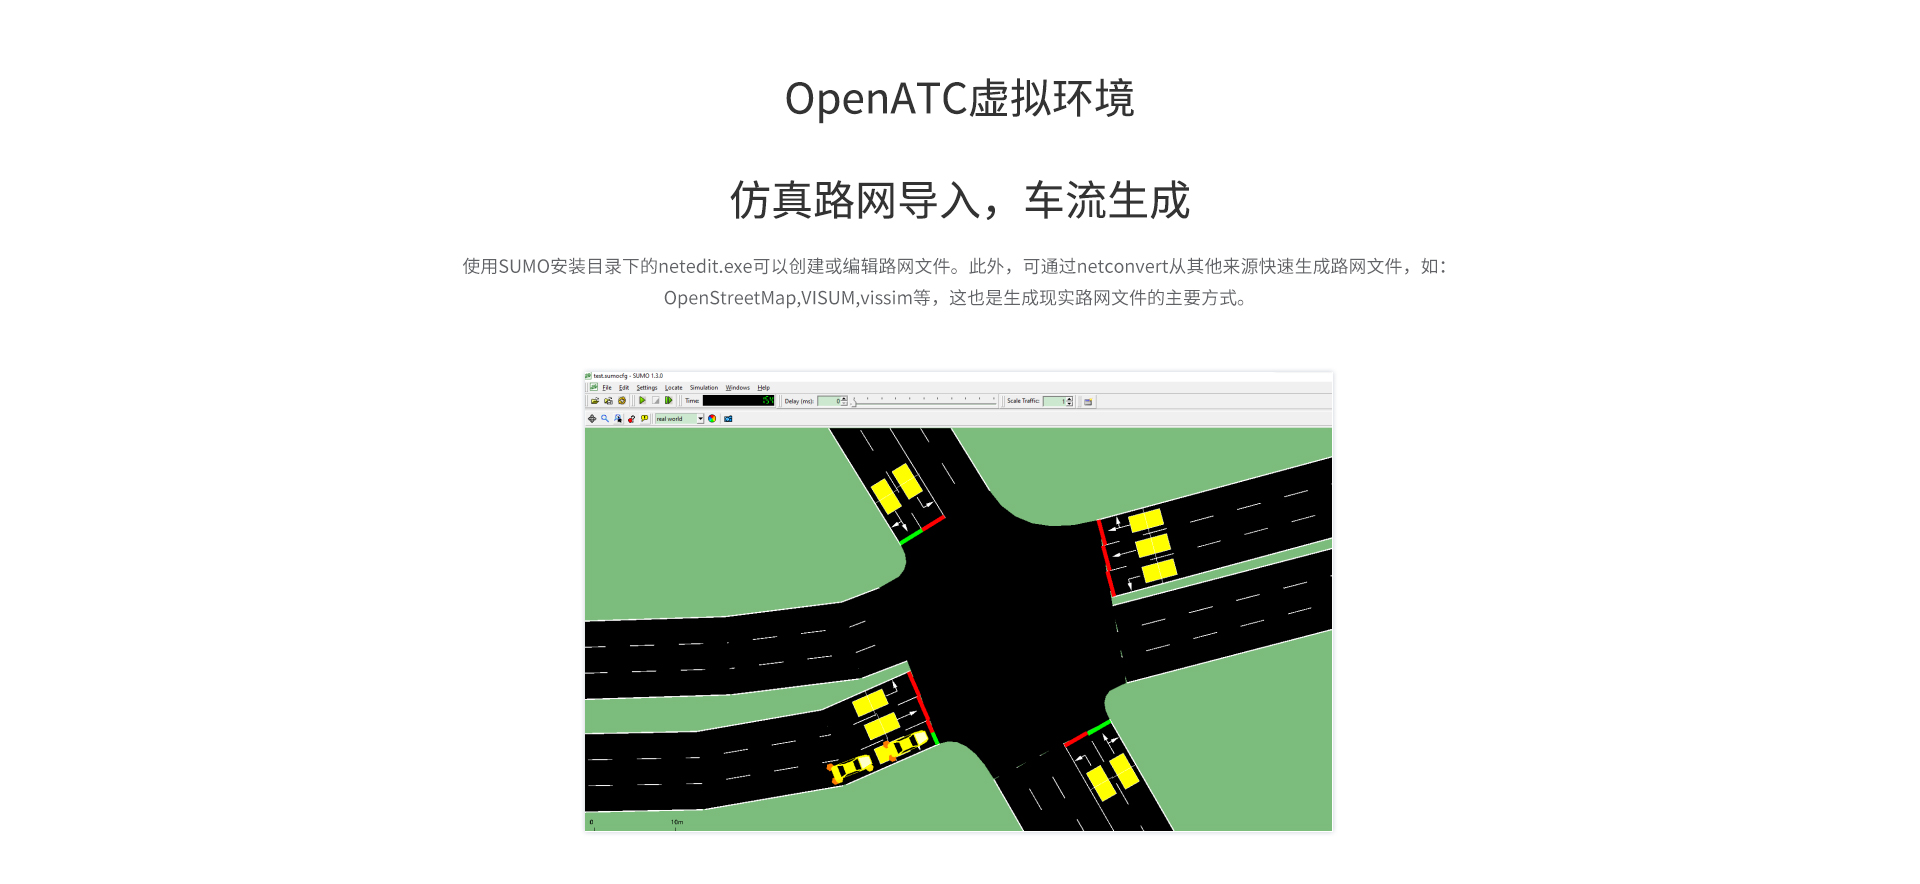 OpenATC虚拟环境